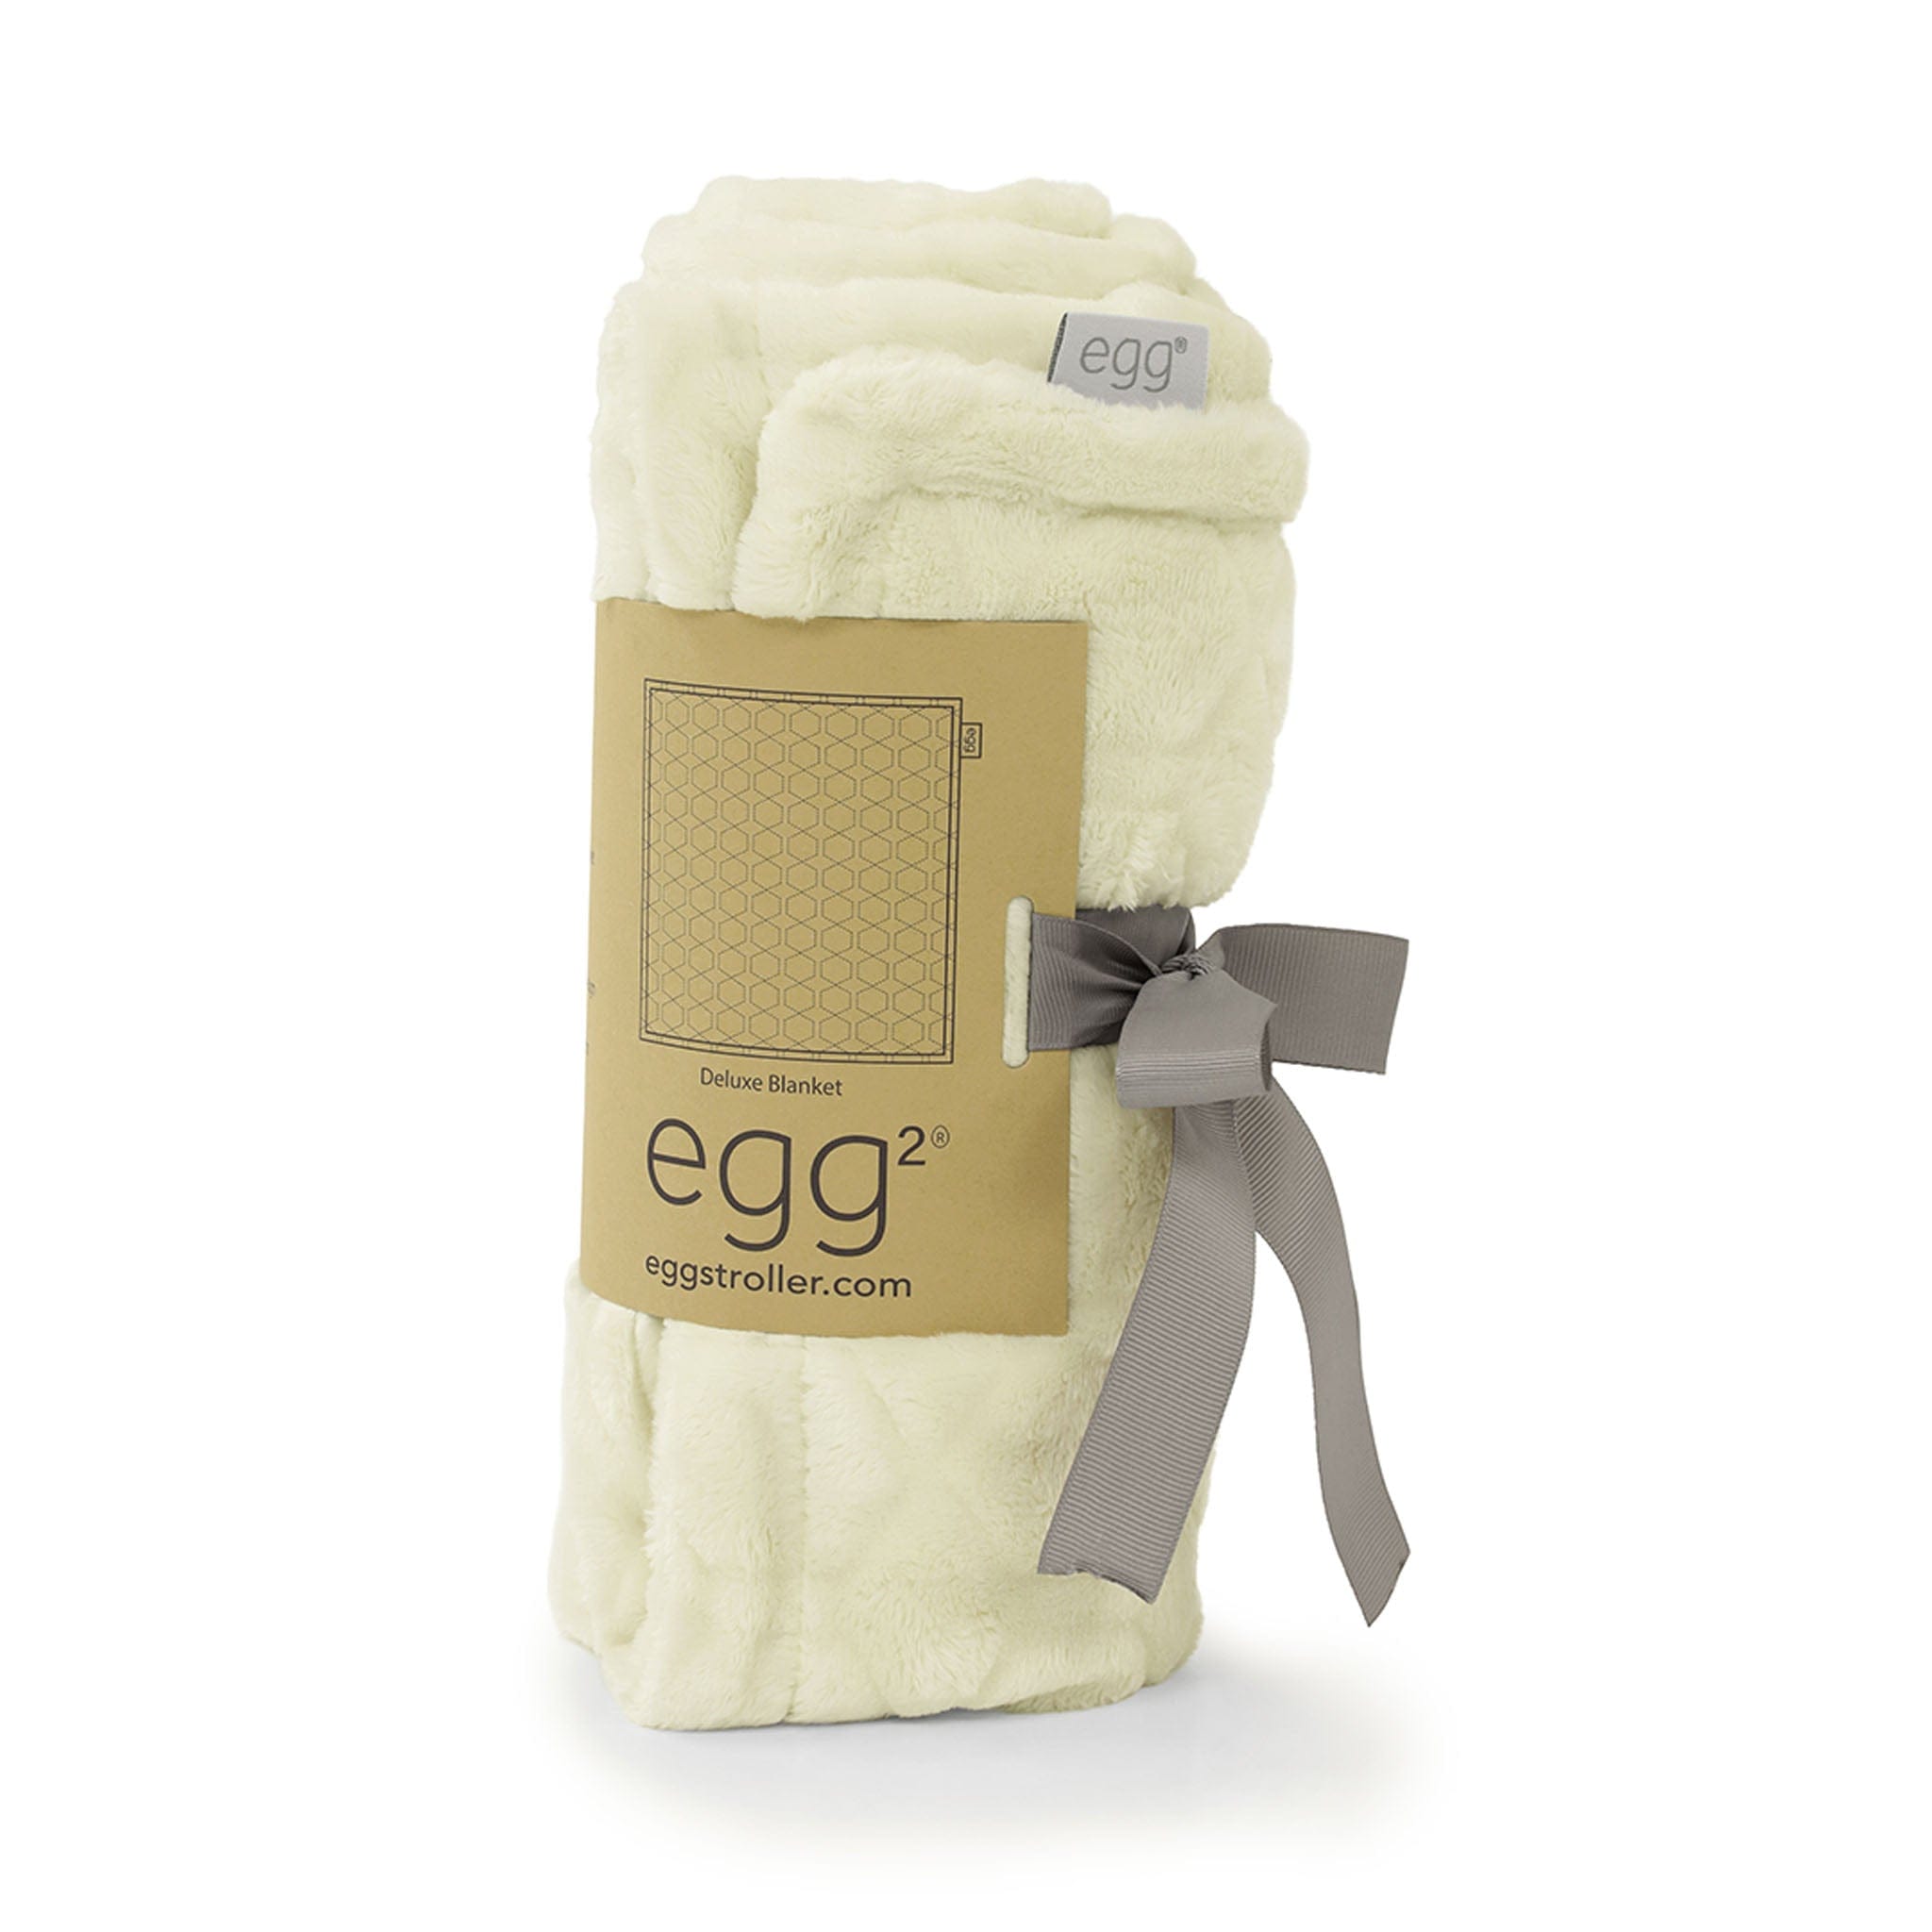 egg buggy accessories egg2 Deluxe Blanket in Cream E2BLCR